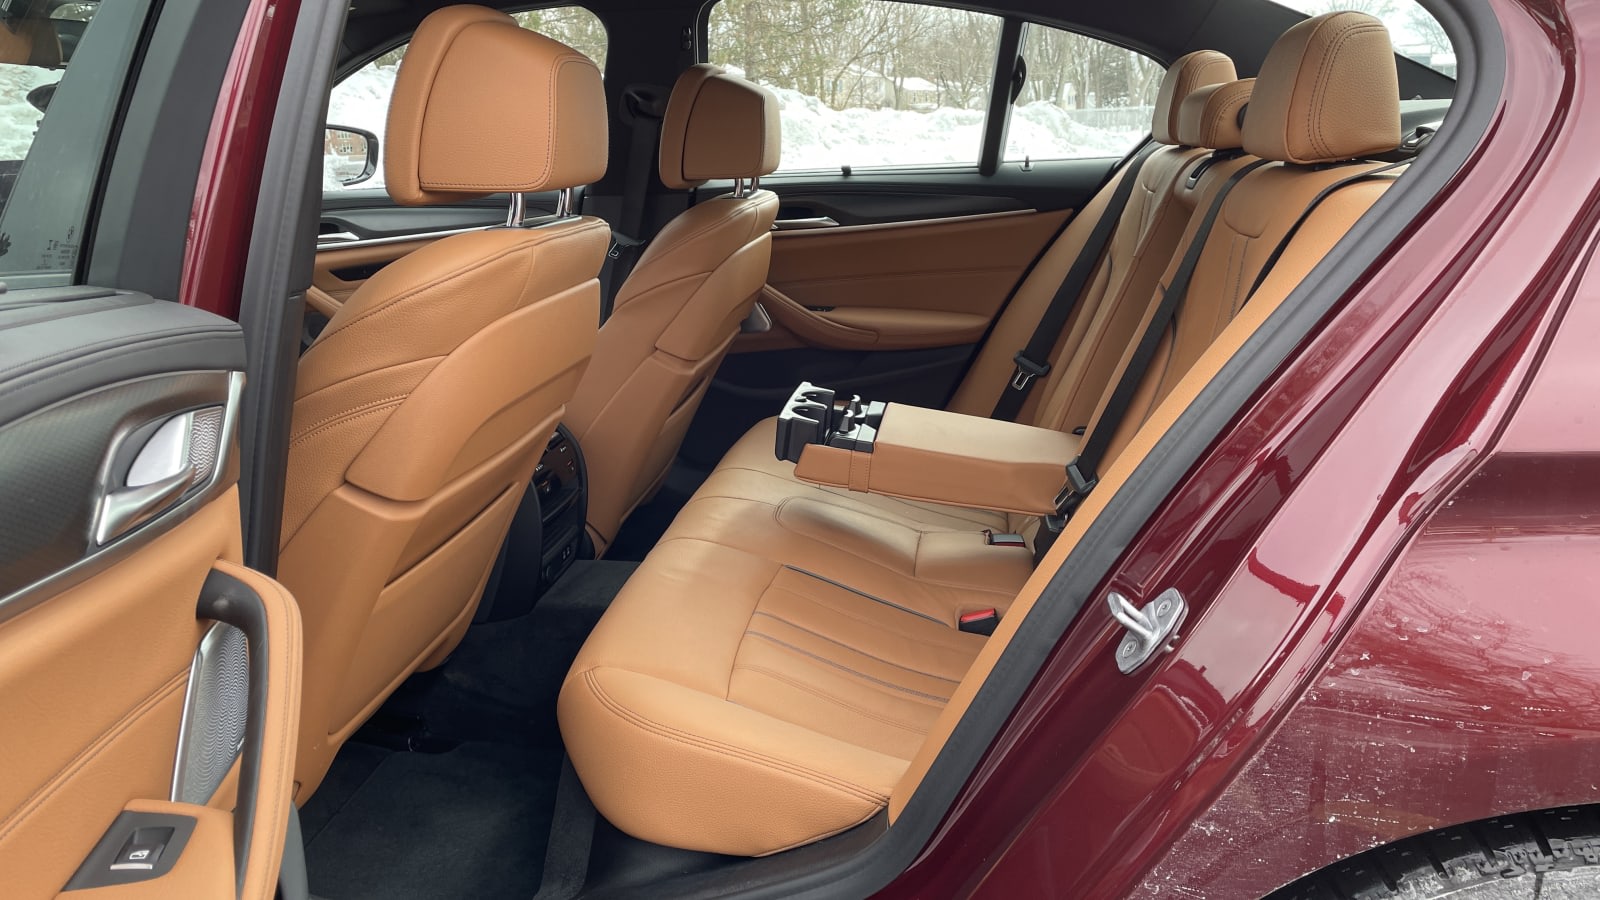 BMW 520i interior - Seats